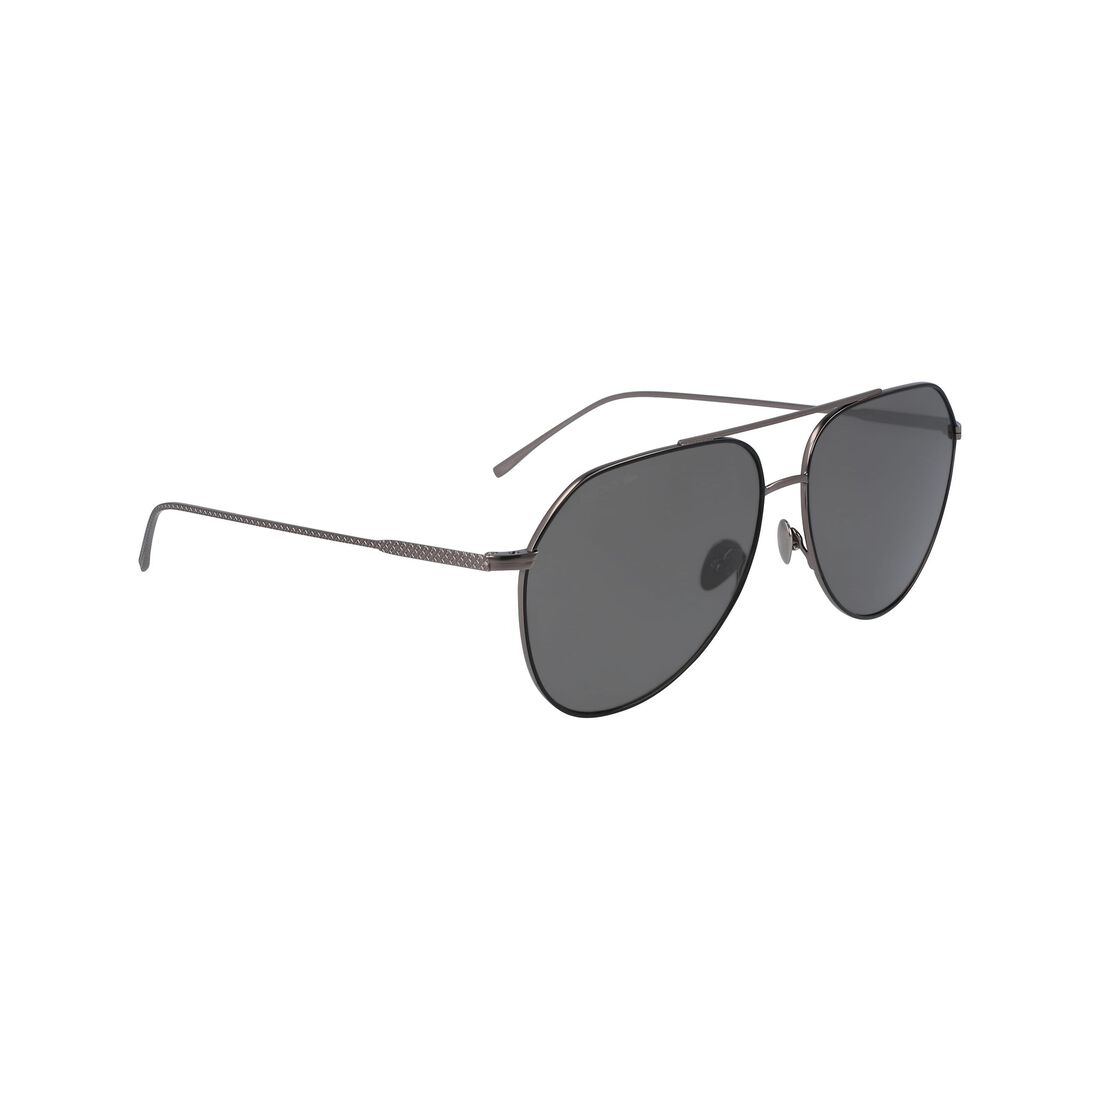 Lacoste Metal Sonnenbrille Herren Grau | KZVX-67504